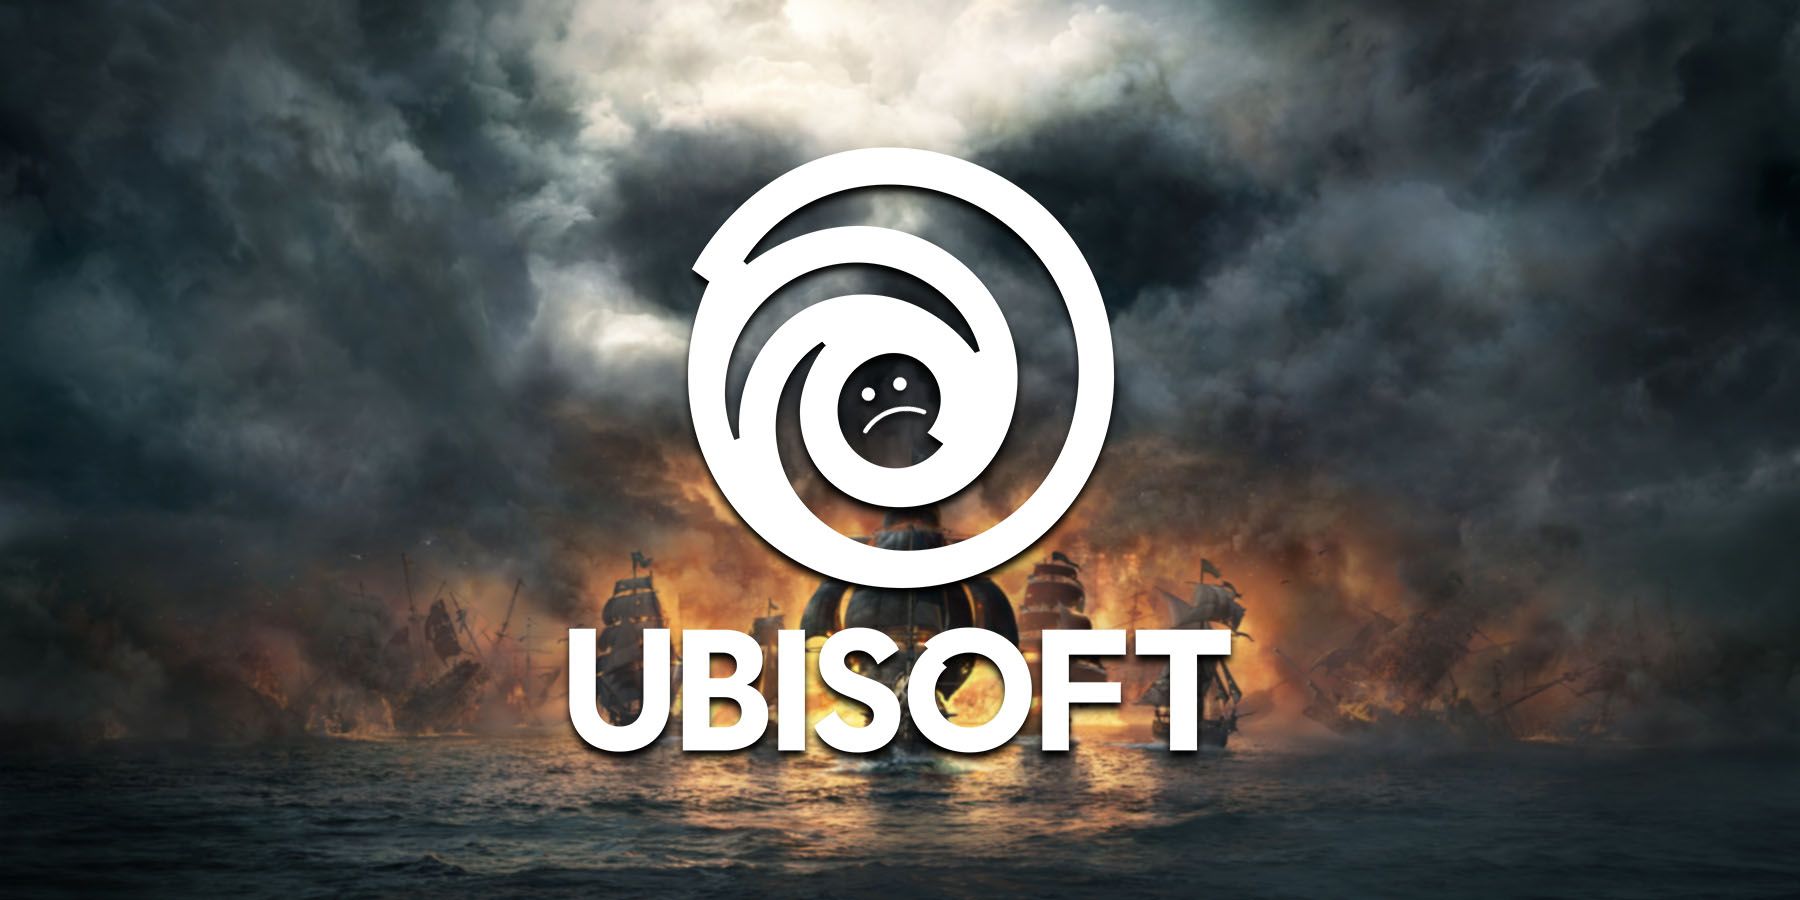 Ubisoft logo with sad face over Skull and Bones background